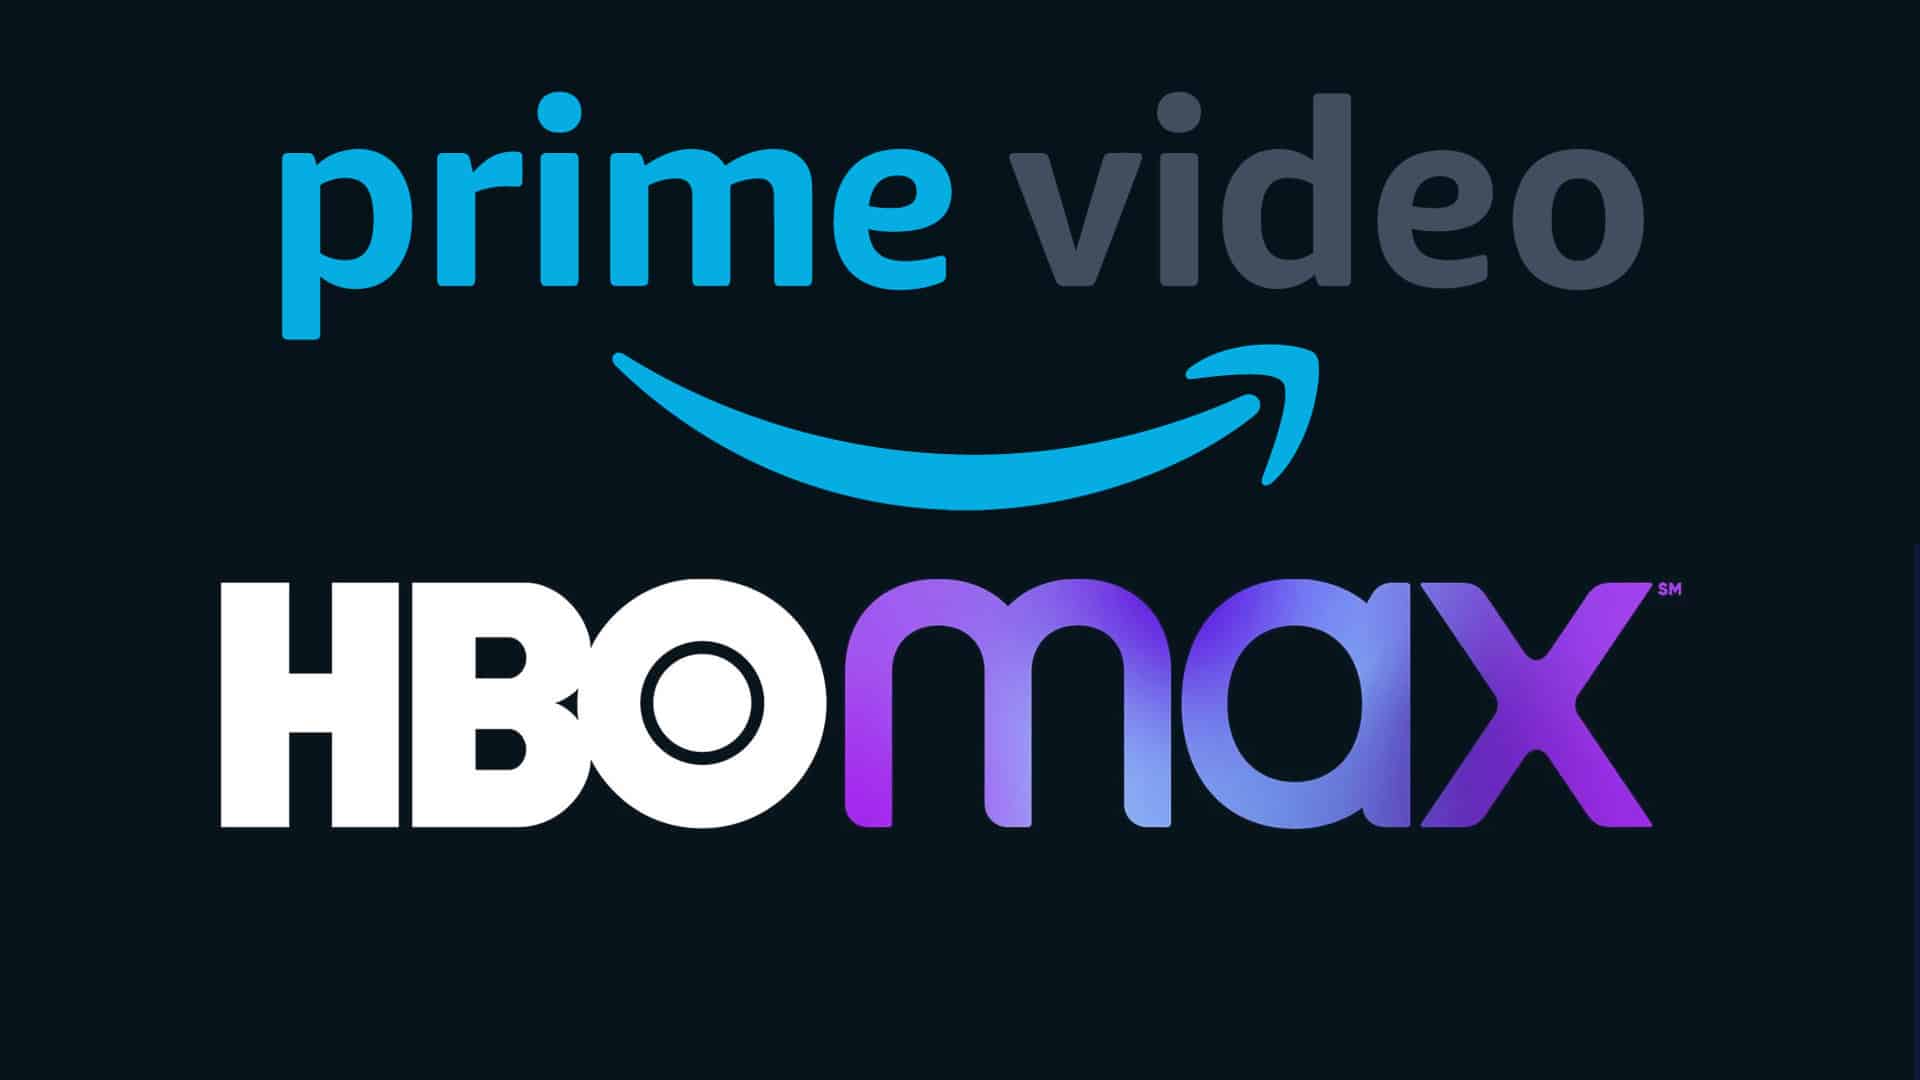 Amazon Prime Video to premiere exclusive slate of HBO Max originals in India